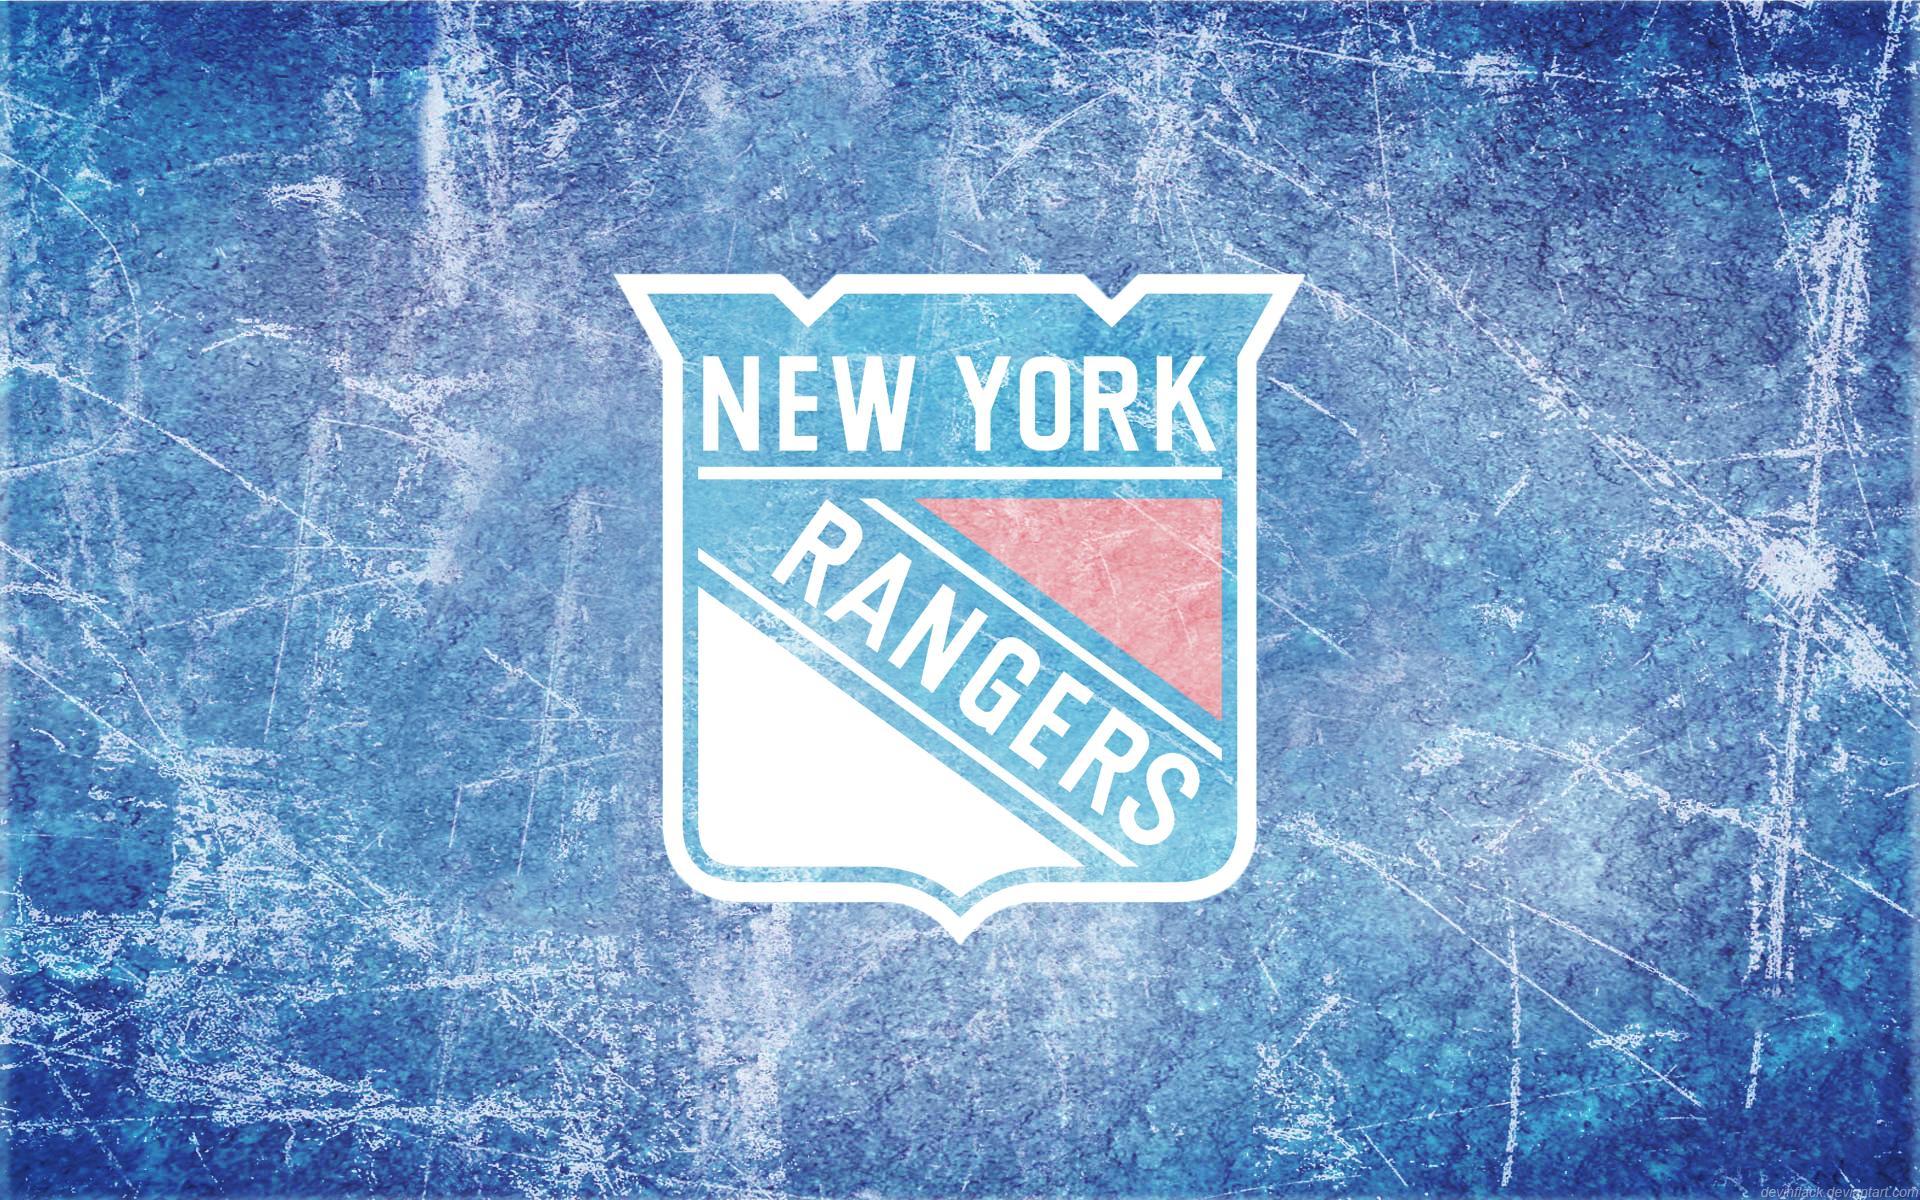 Ny Rangers Background